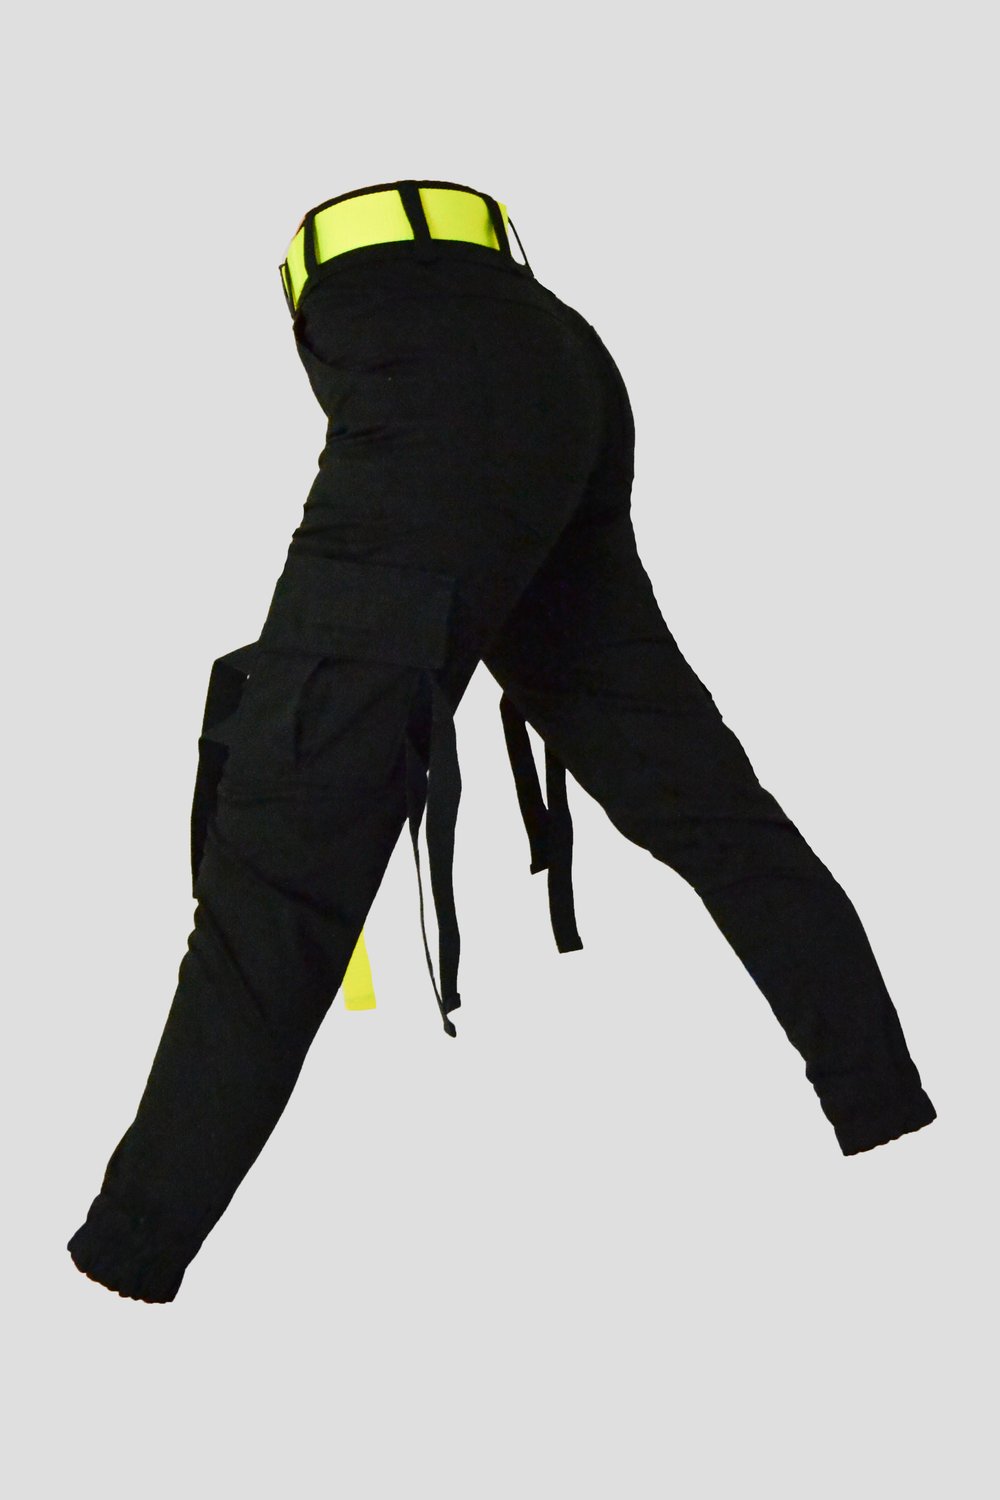 Image of Black cargo pants